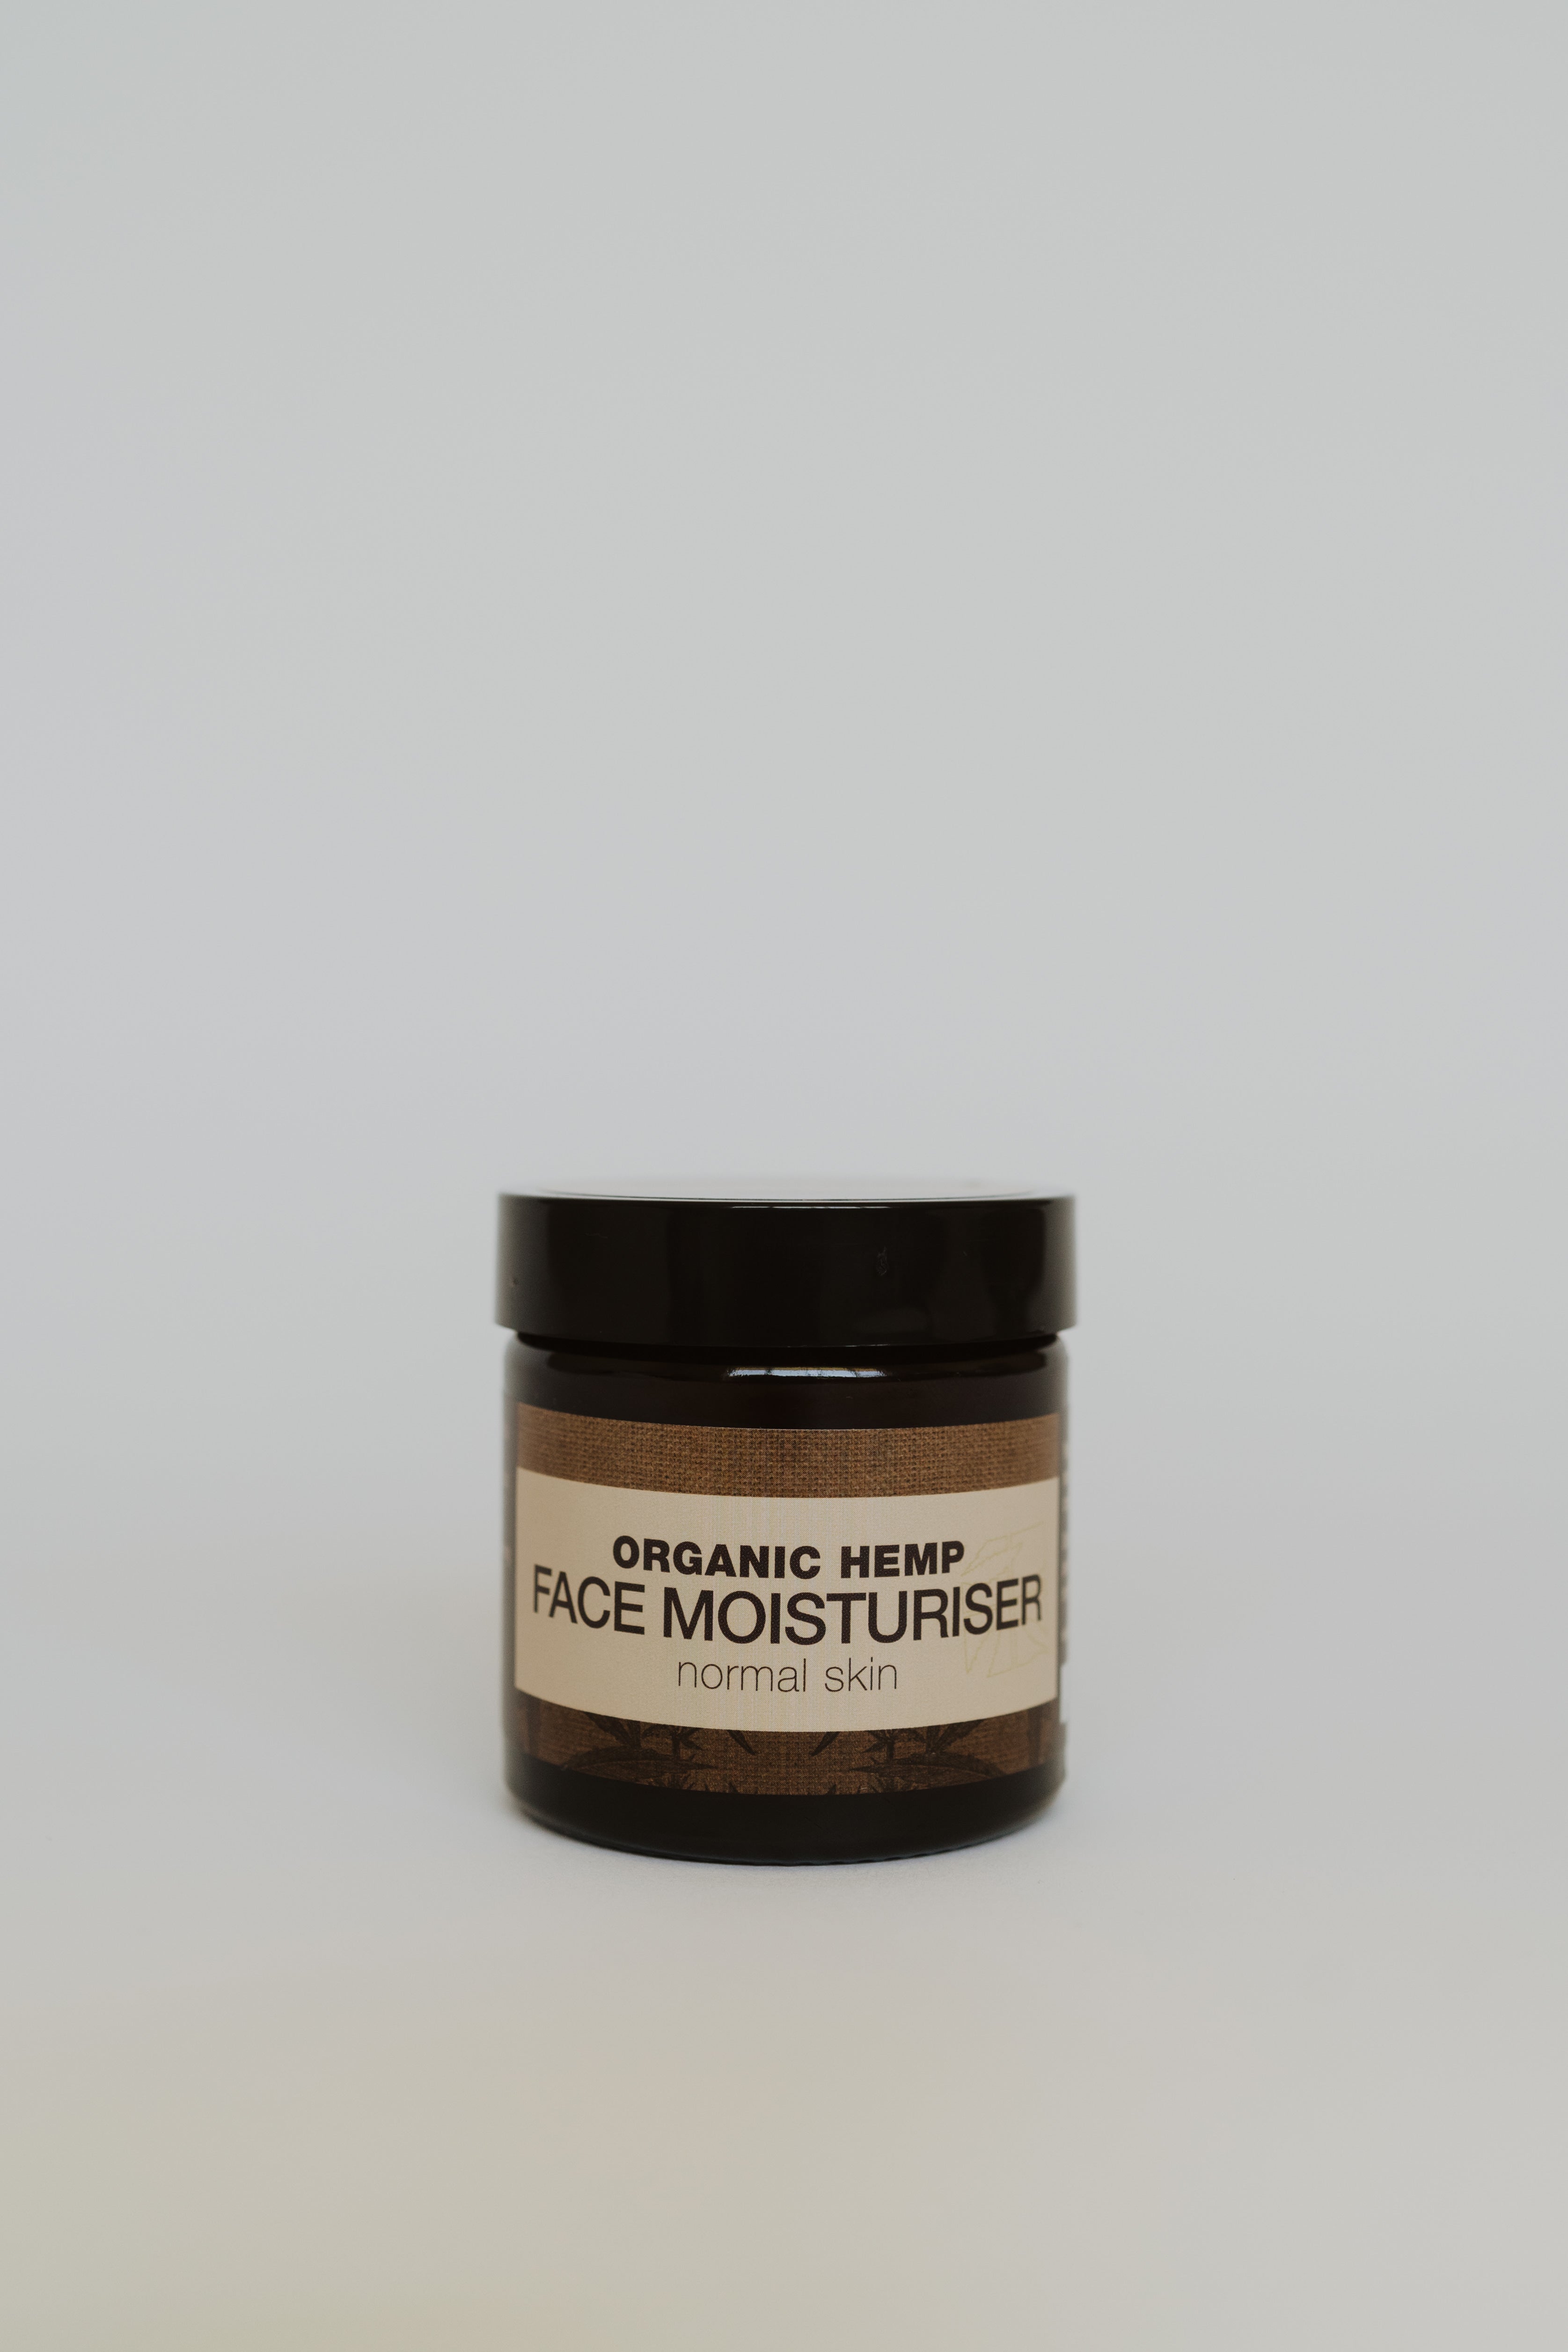 Organic Hemp Facial Moisturiser (normal skin) - 60g